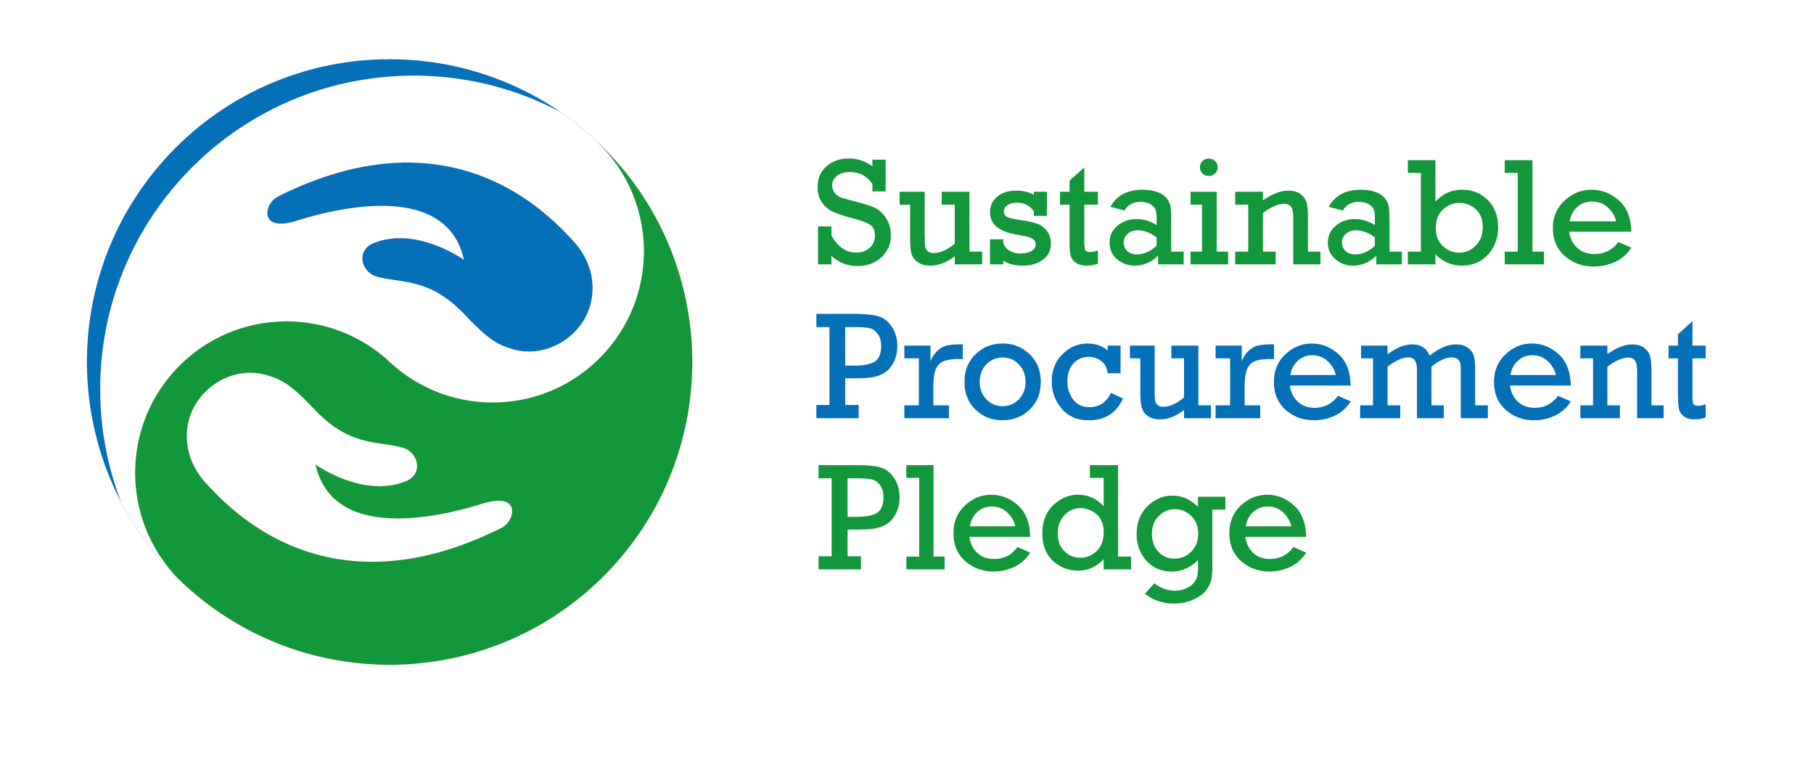 Sustainable Procurement Pledge Logo